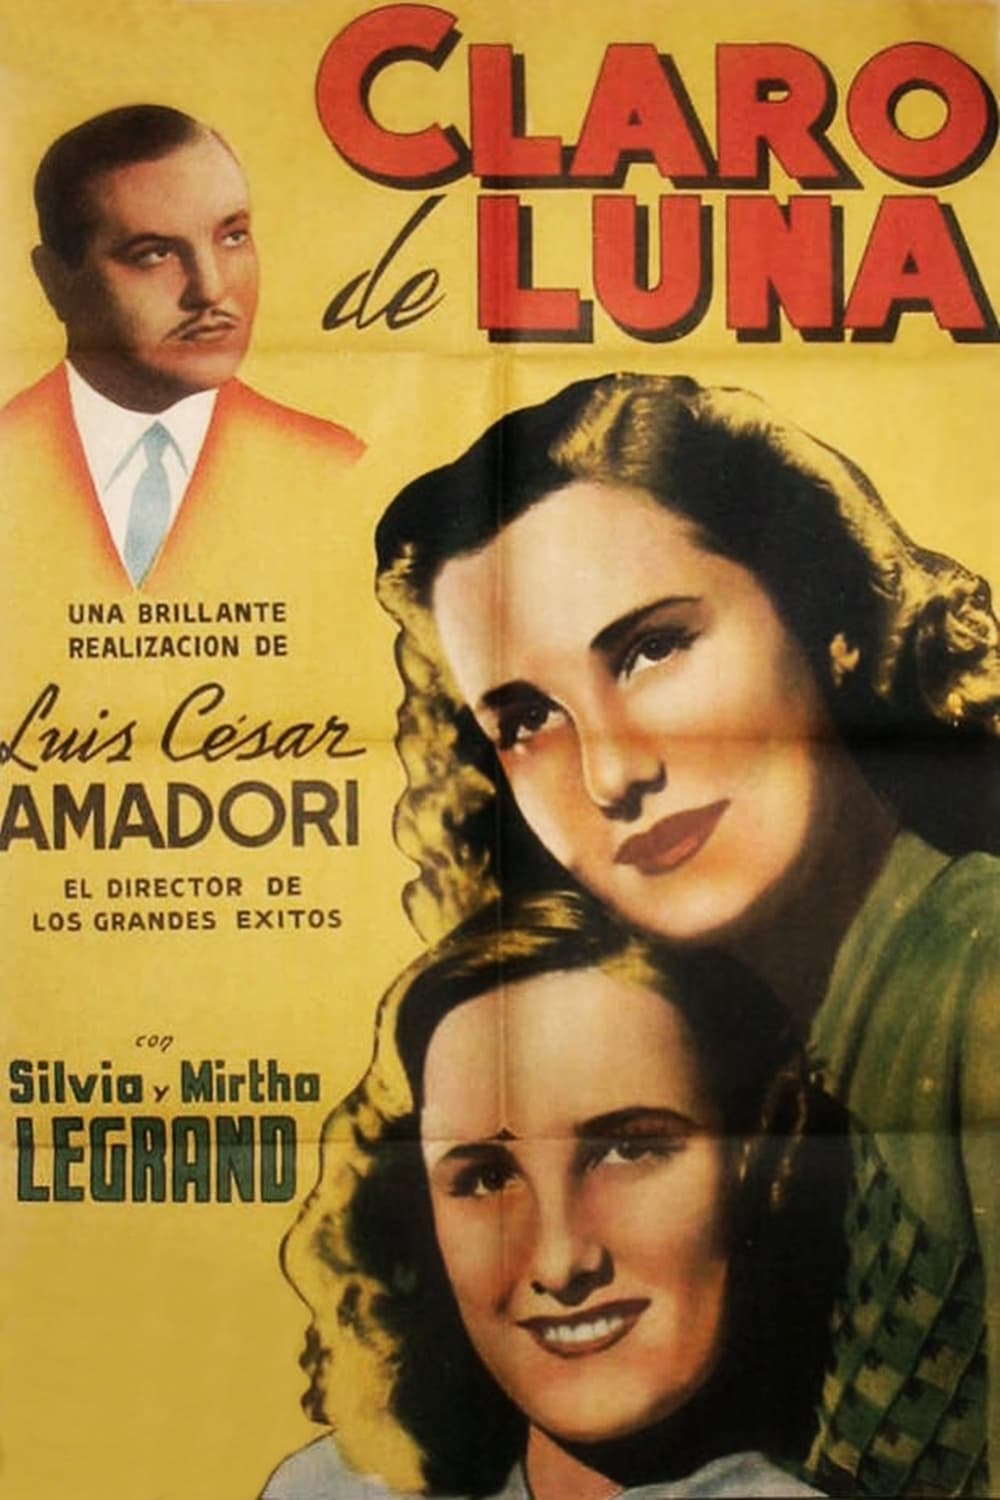 Claro de luna (1942)